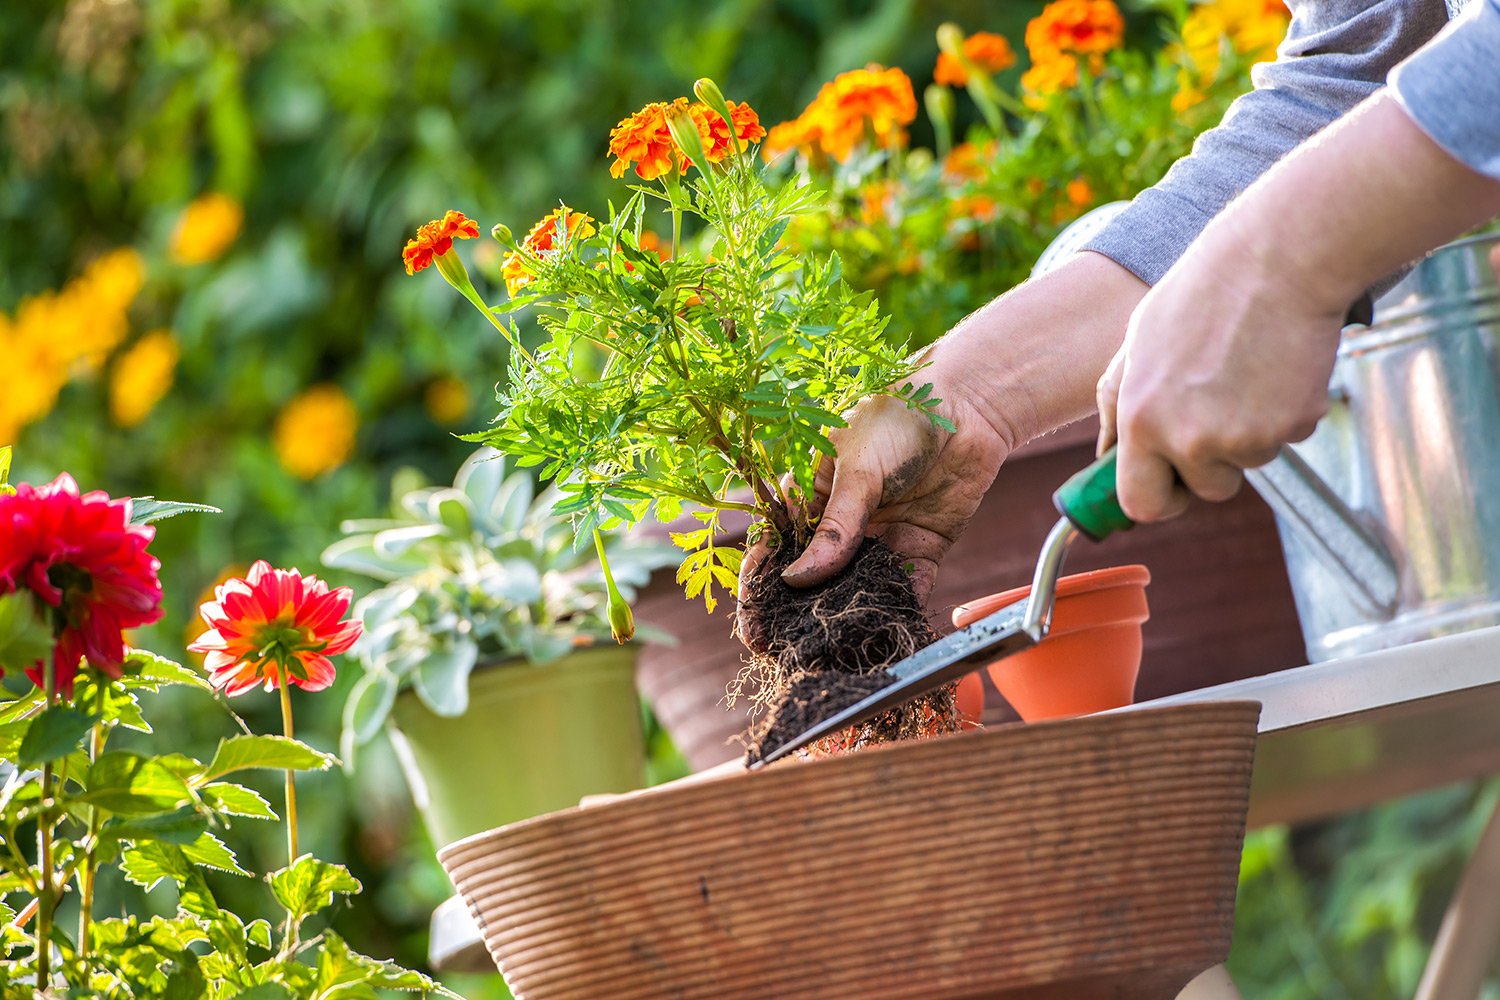 Peter Donegan to Host RHSI Gardening Show Talks Stage This Summer